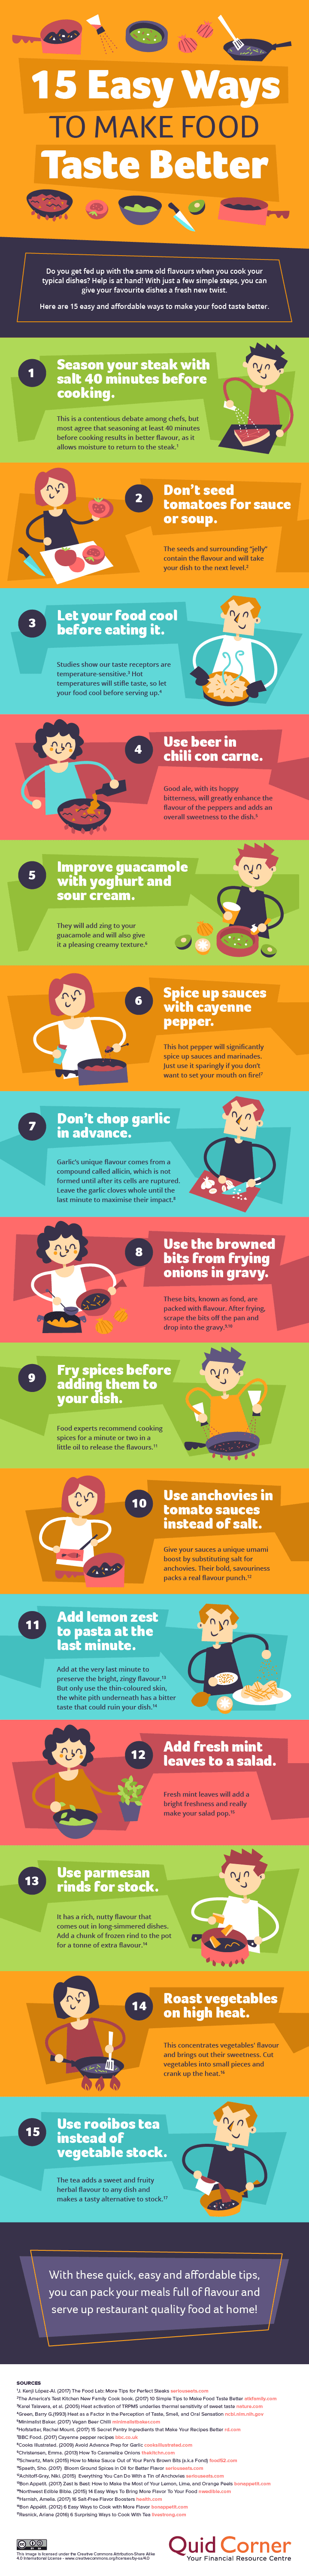 15 Easy Ways to Make Food Taste Better